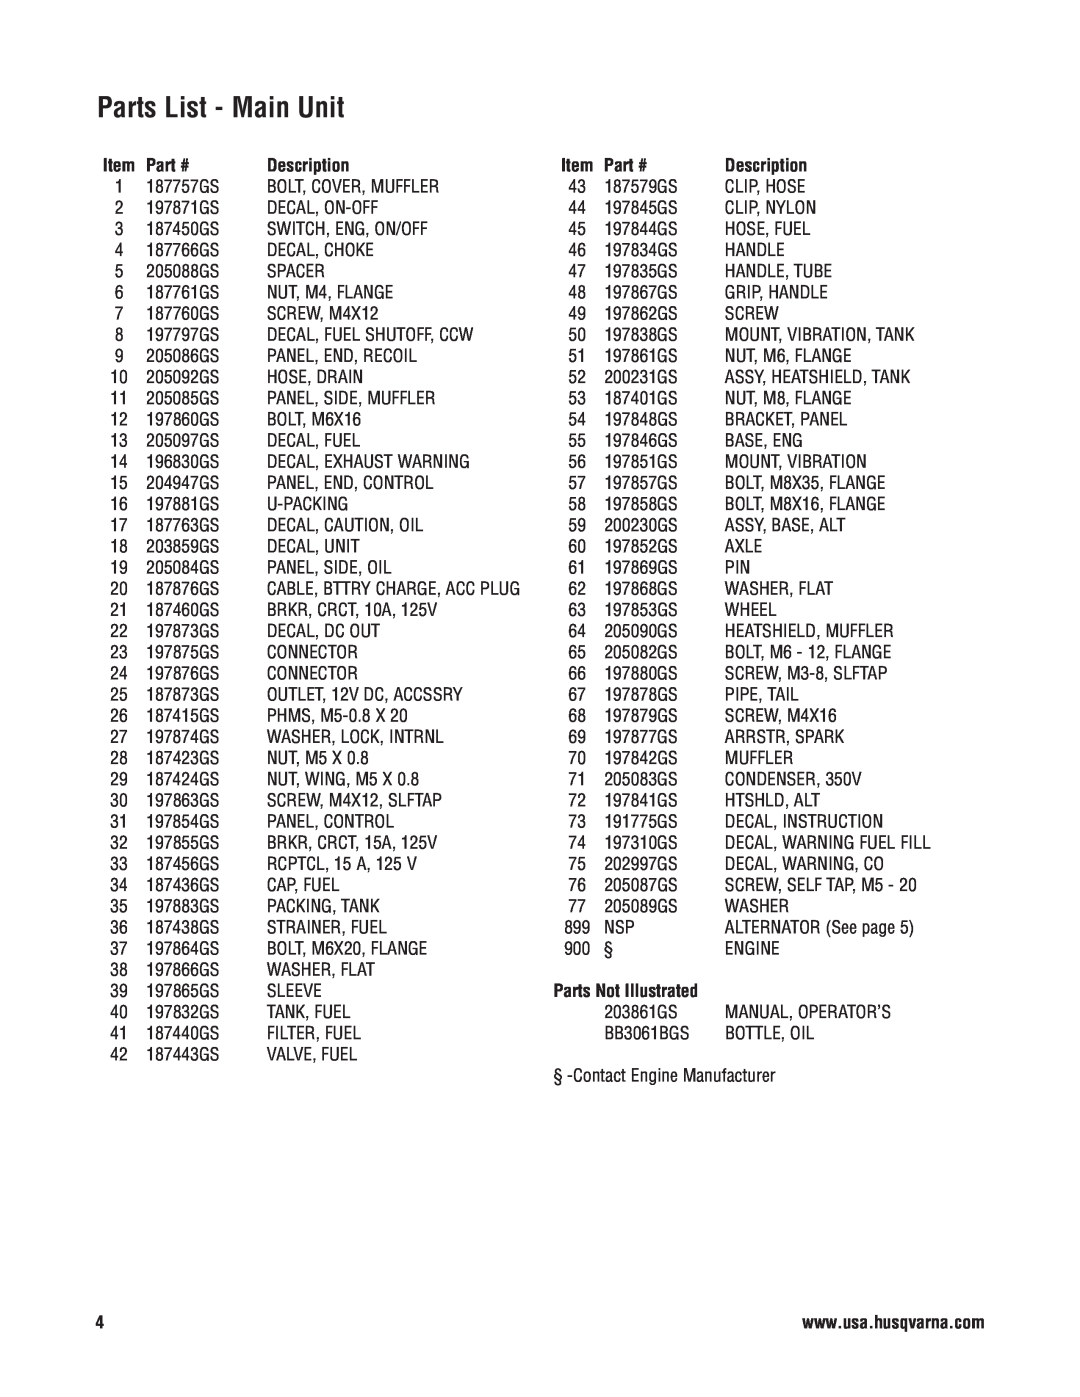 Husqvarna 420 GN Parts List - Main Unit, Mount, Vibration, Tank, Assy, Heatshield, Tank, Cable, Bttry Charge, Acc Plug 